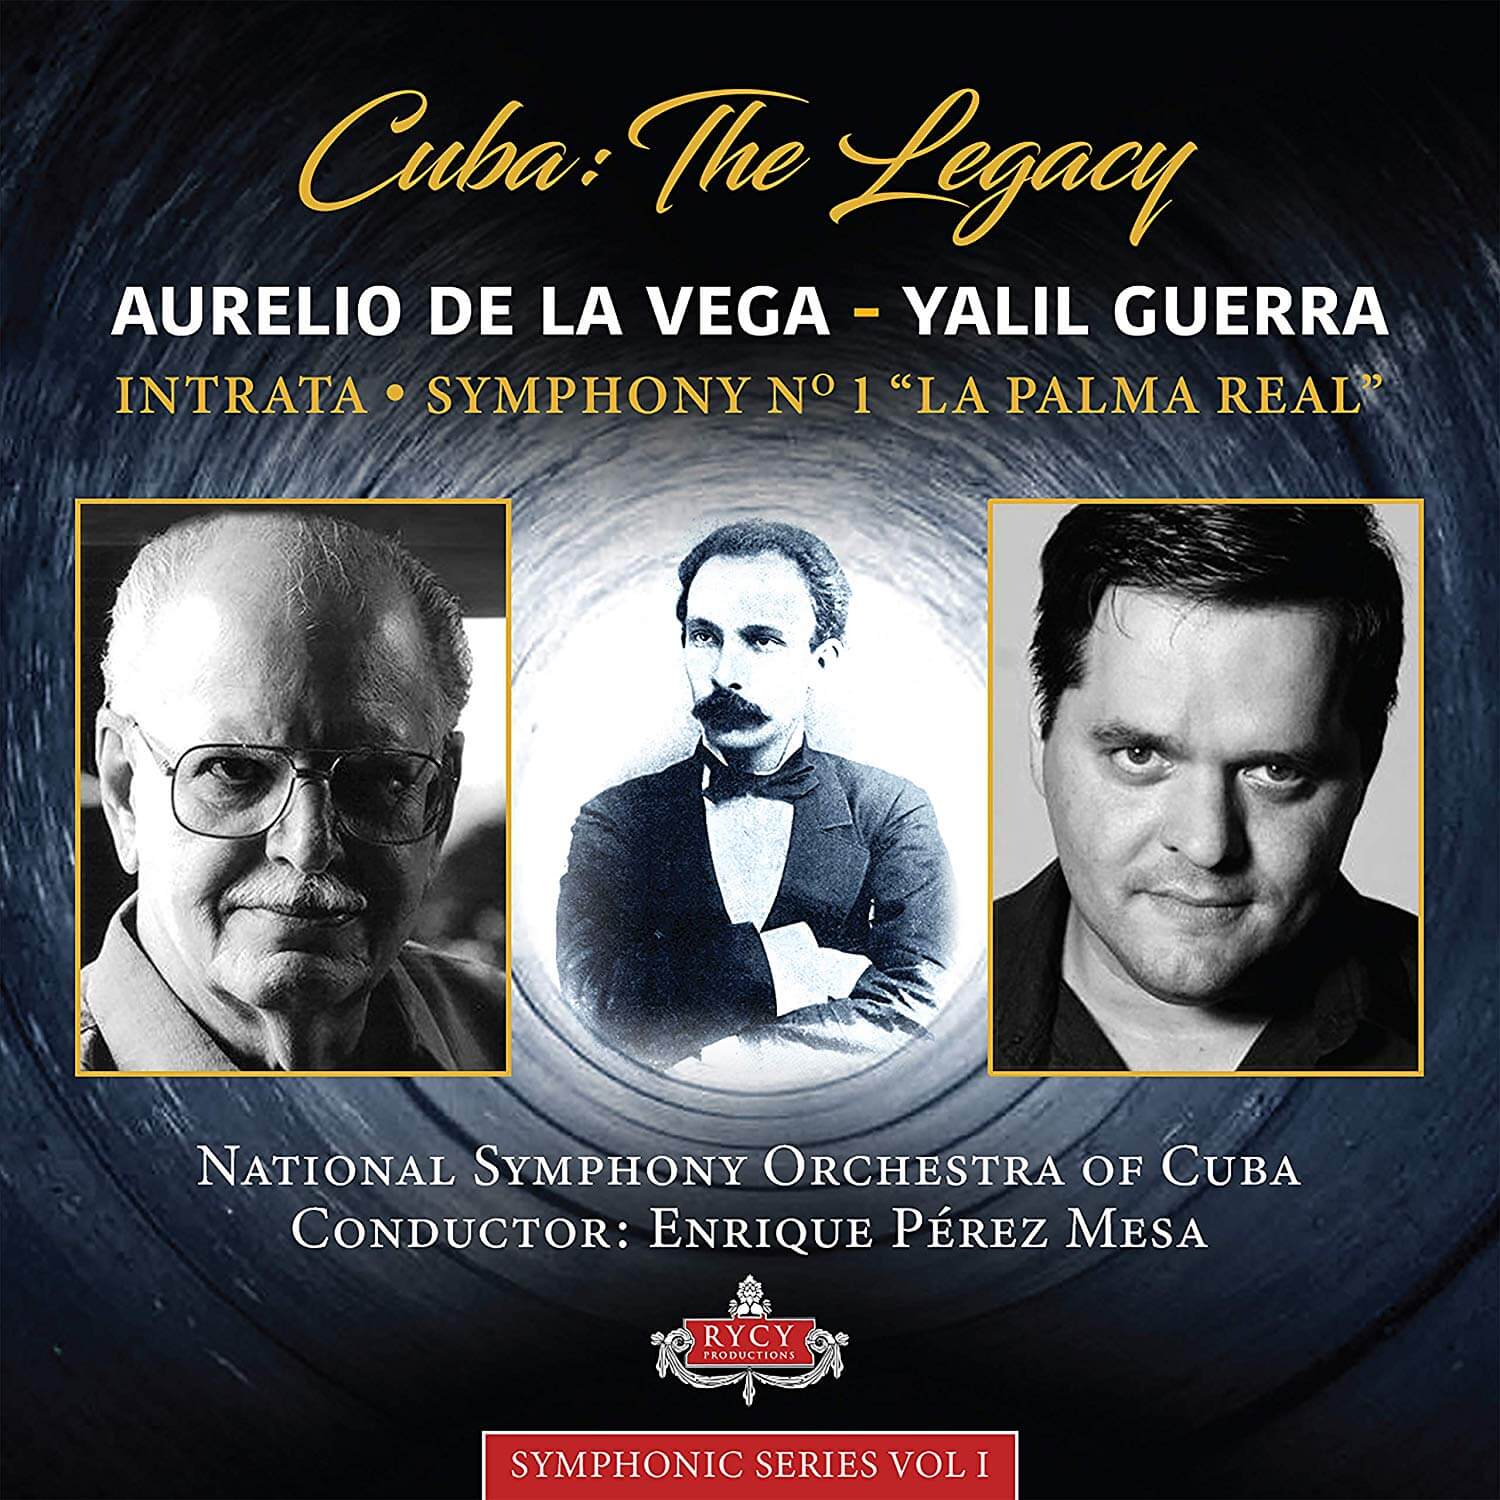 Cuba: The Legacy - Yalil Guerra